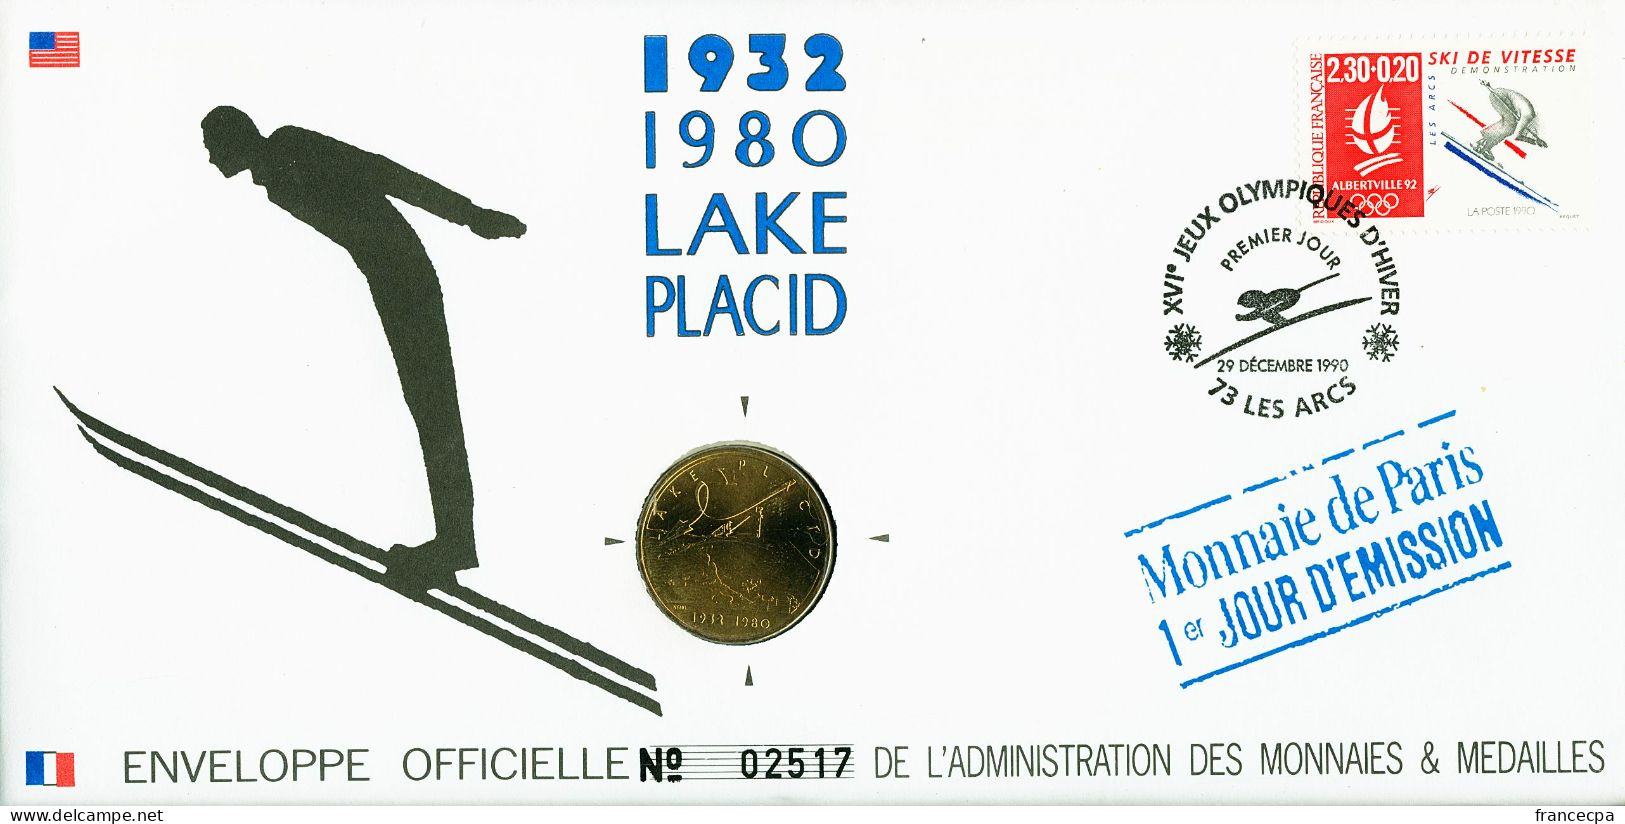 03 - JEUX OLYMPIQUES D'HIVER ALBERTVILLE 92 - 1932 - 1980 LAKE PLACID - Invierno 1932: Lake Placid